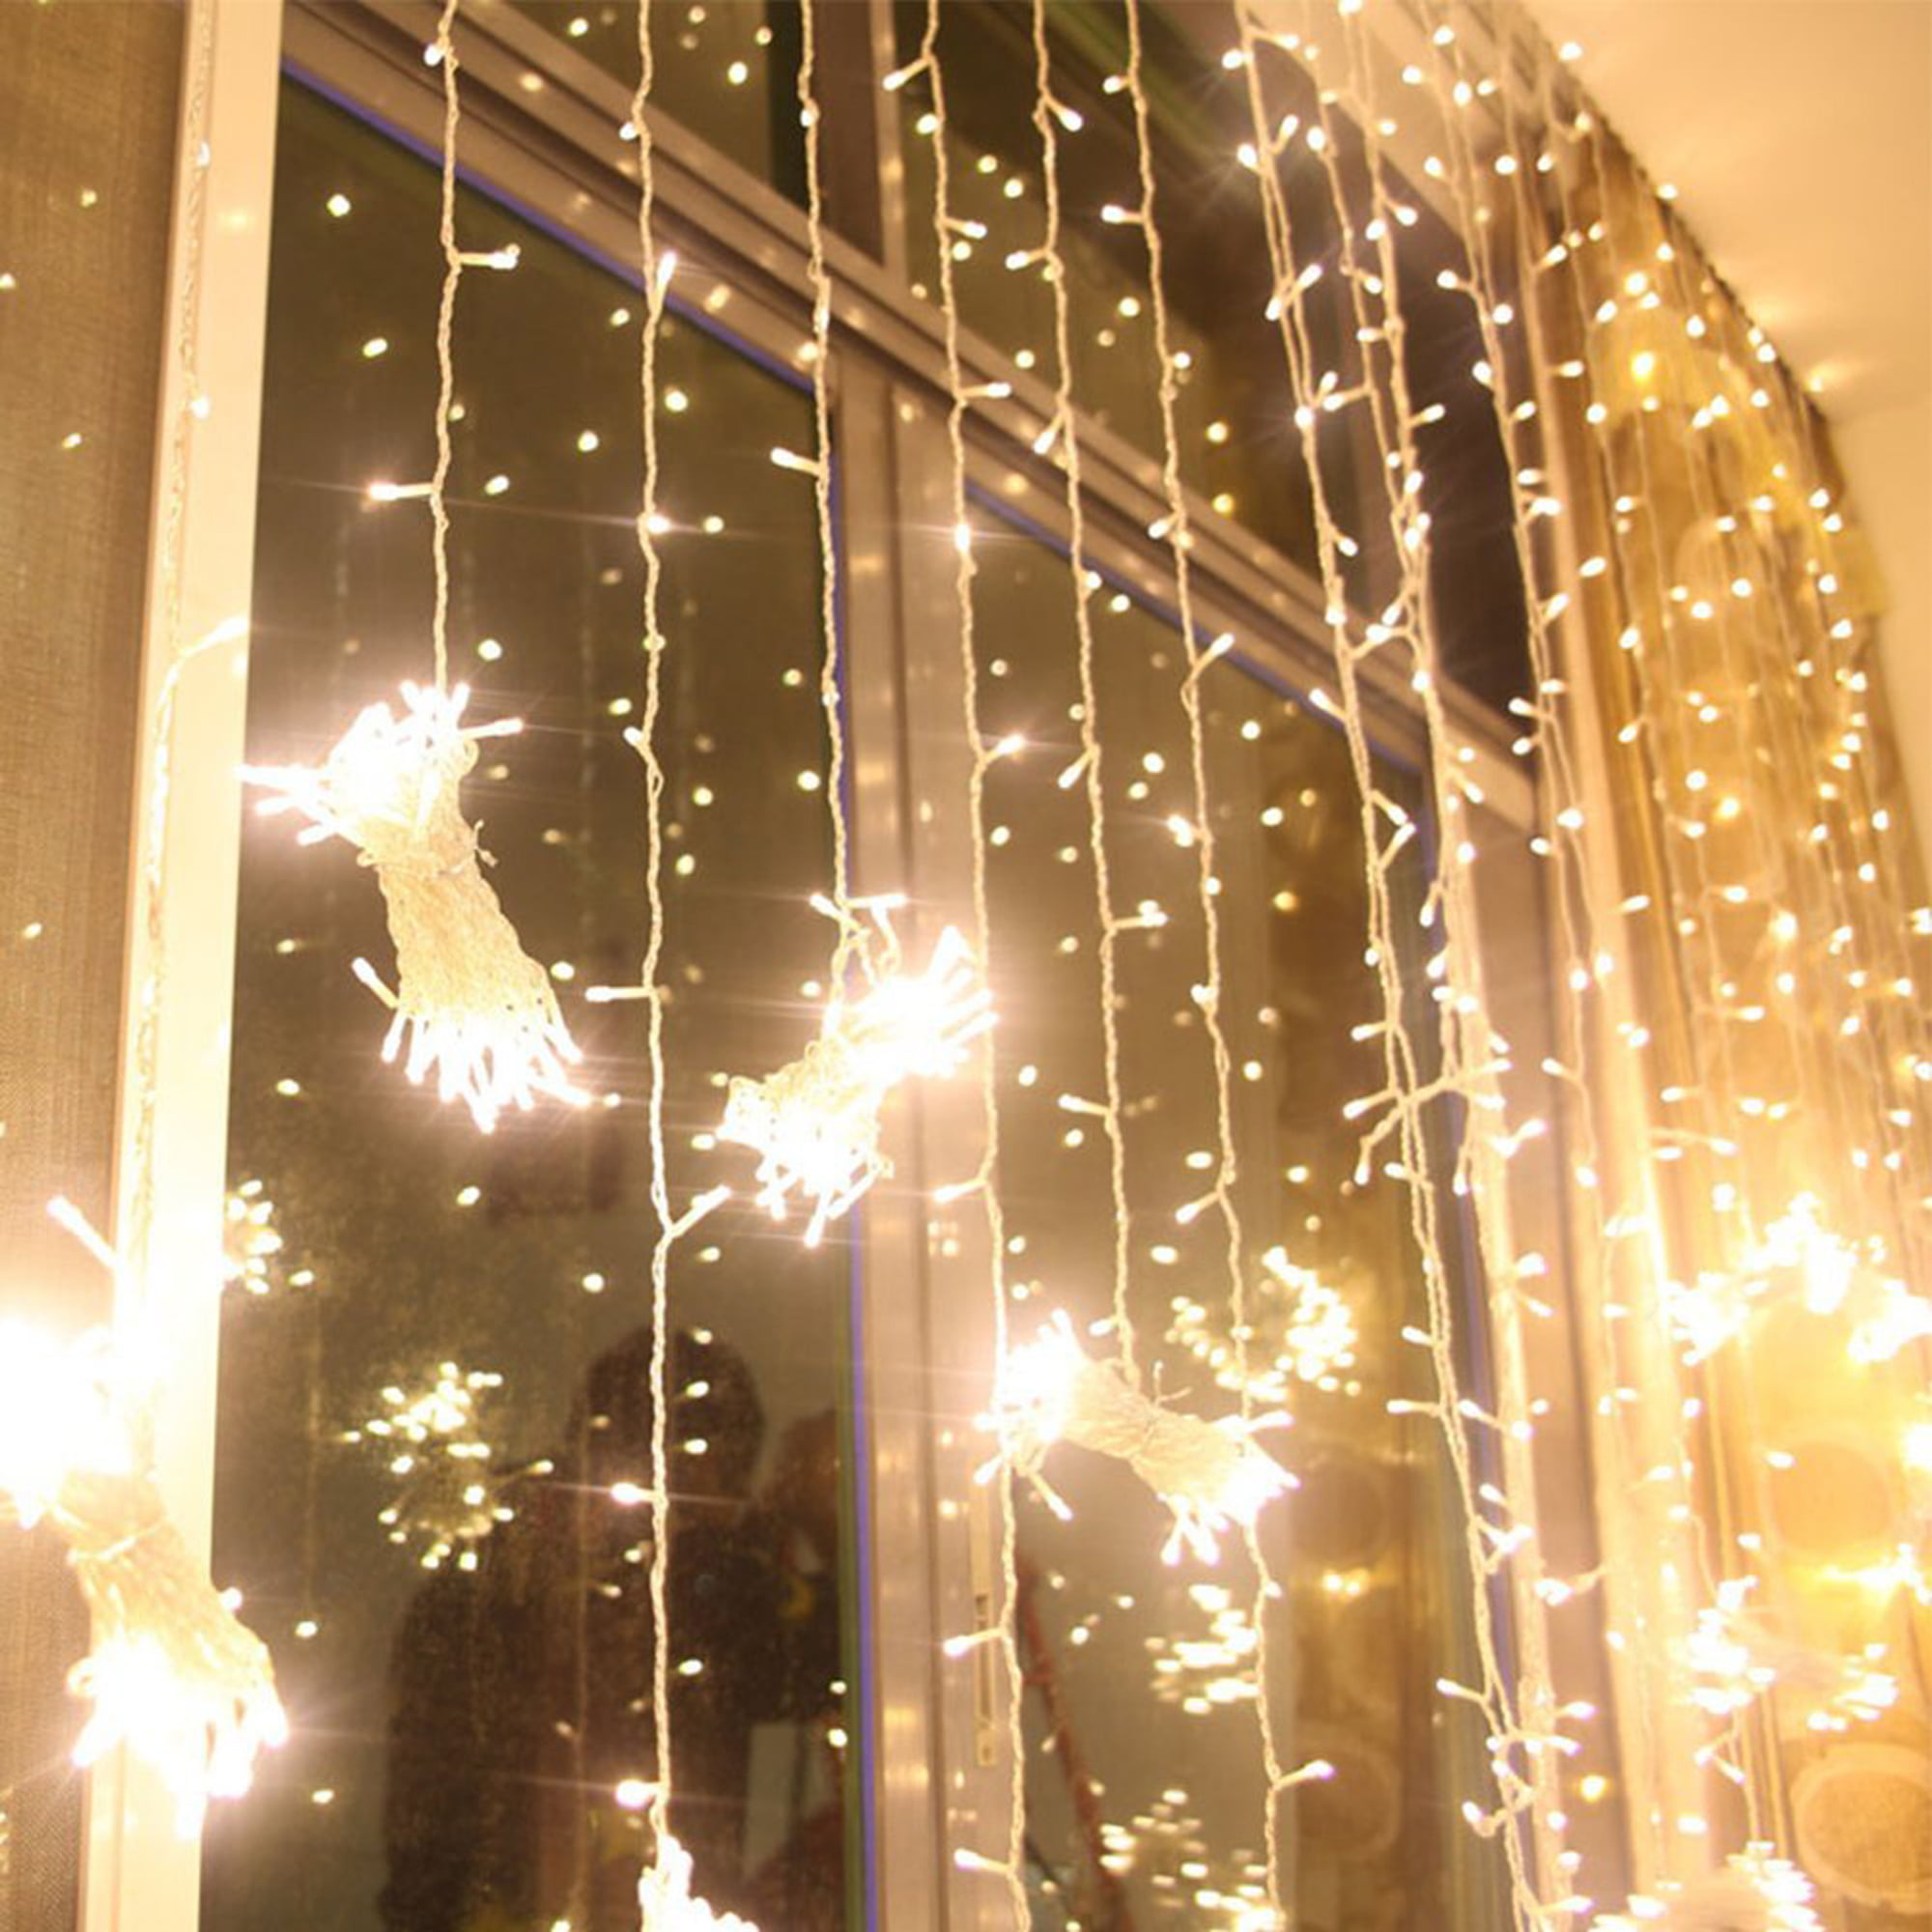 300 LED Curtain Fairy Lights Indoor/Outdoor Wedding Party Christmas Decor US KY 